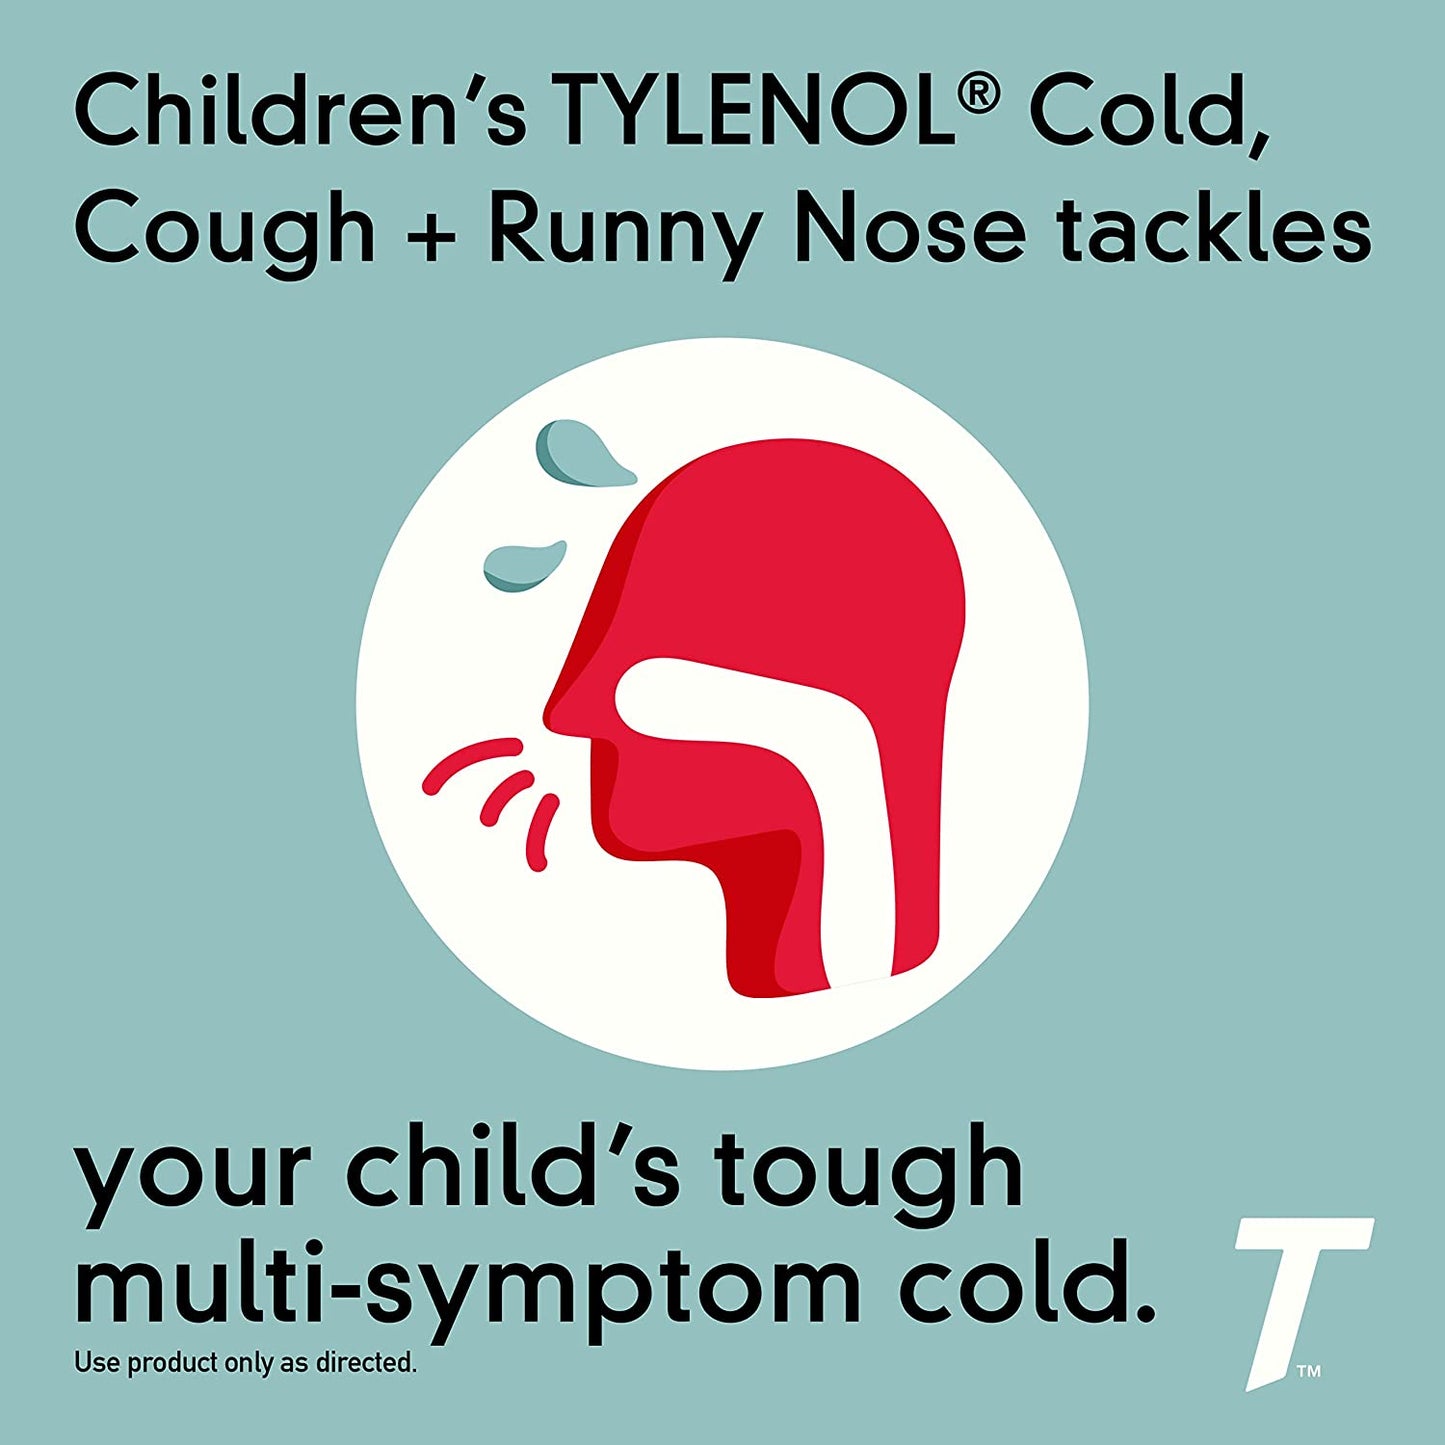 Children's Tylenol Cold + Cough + Runny Nose & Fever Medicine with Acetaminophen, Grape, 4 fl. oz